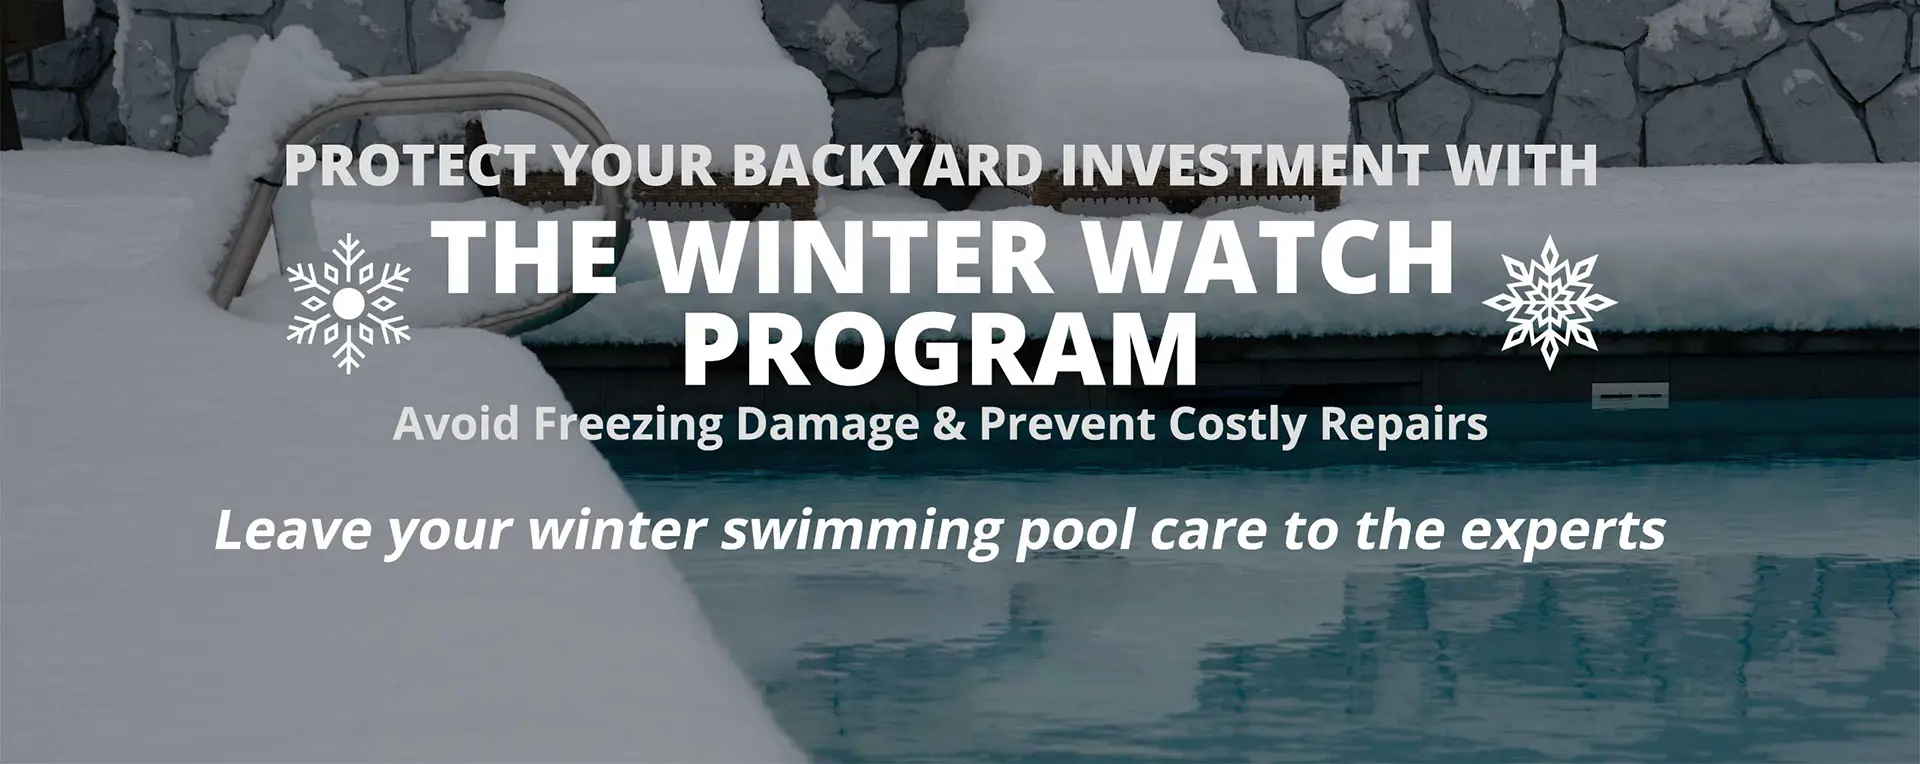 The Winter Watch Program